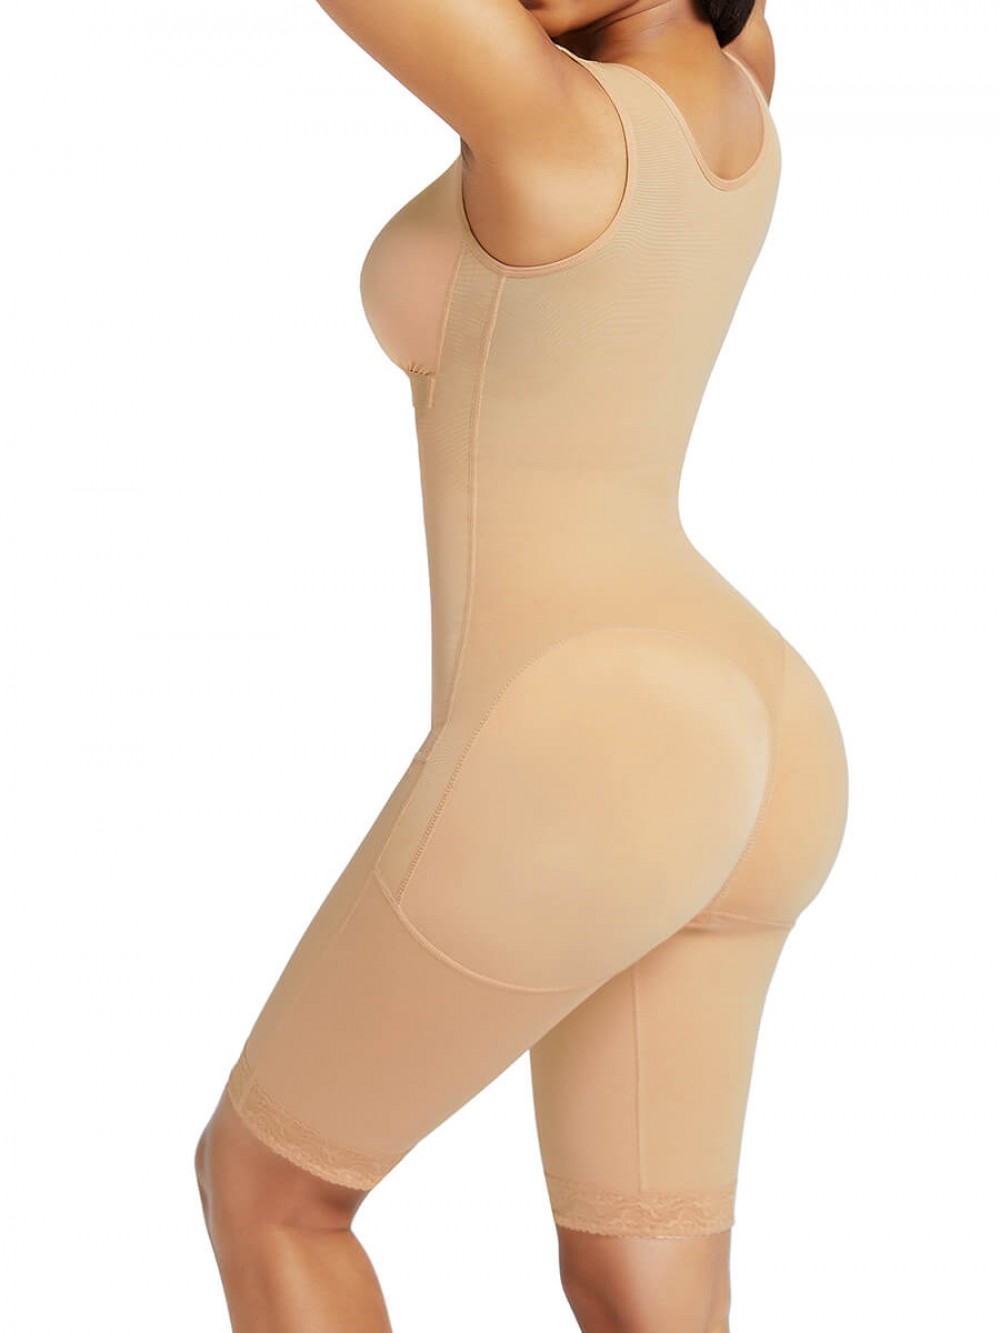 Nude Sleek Curves Superfit Shapewear Flatten Tummy Butt Lifter High Quality